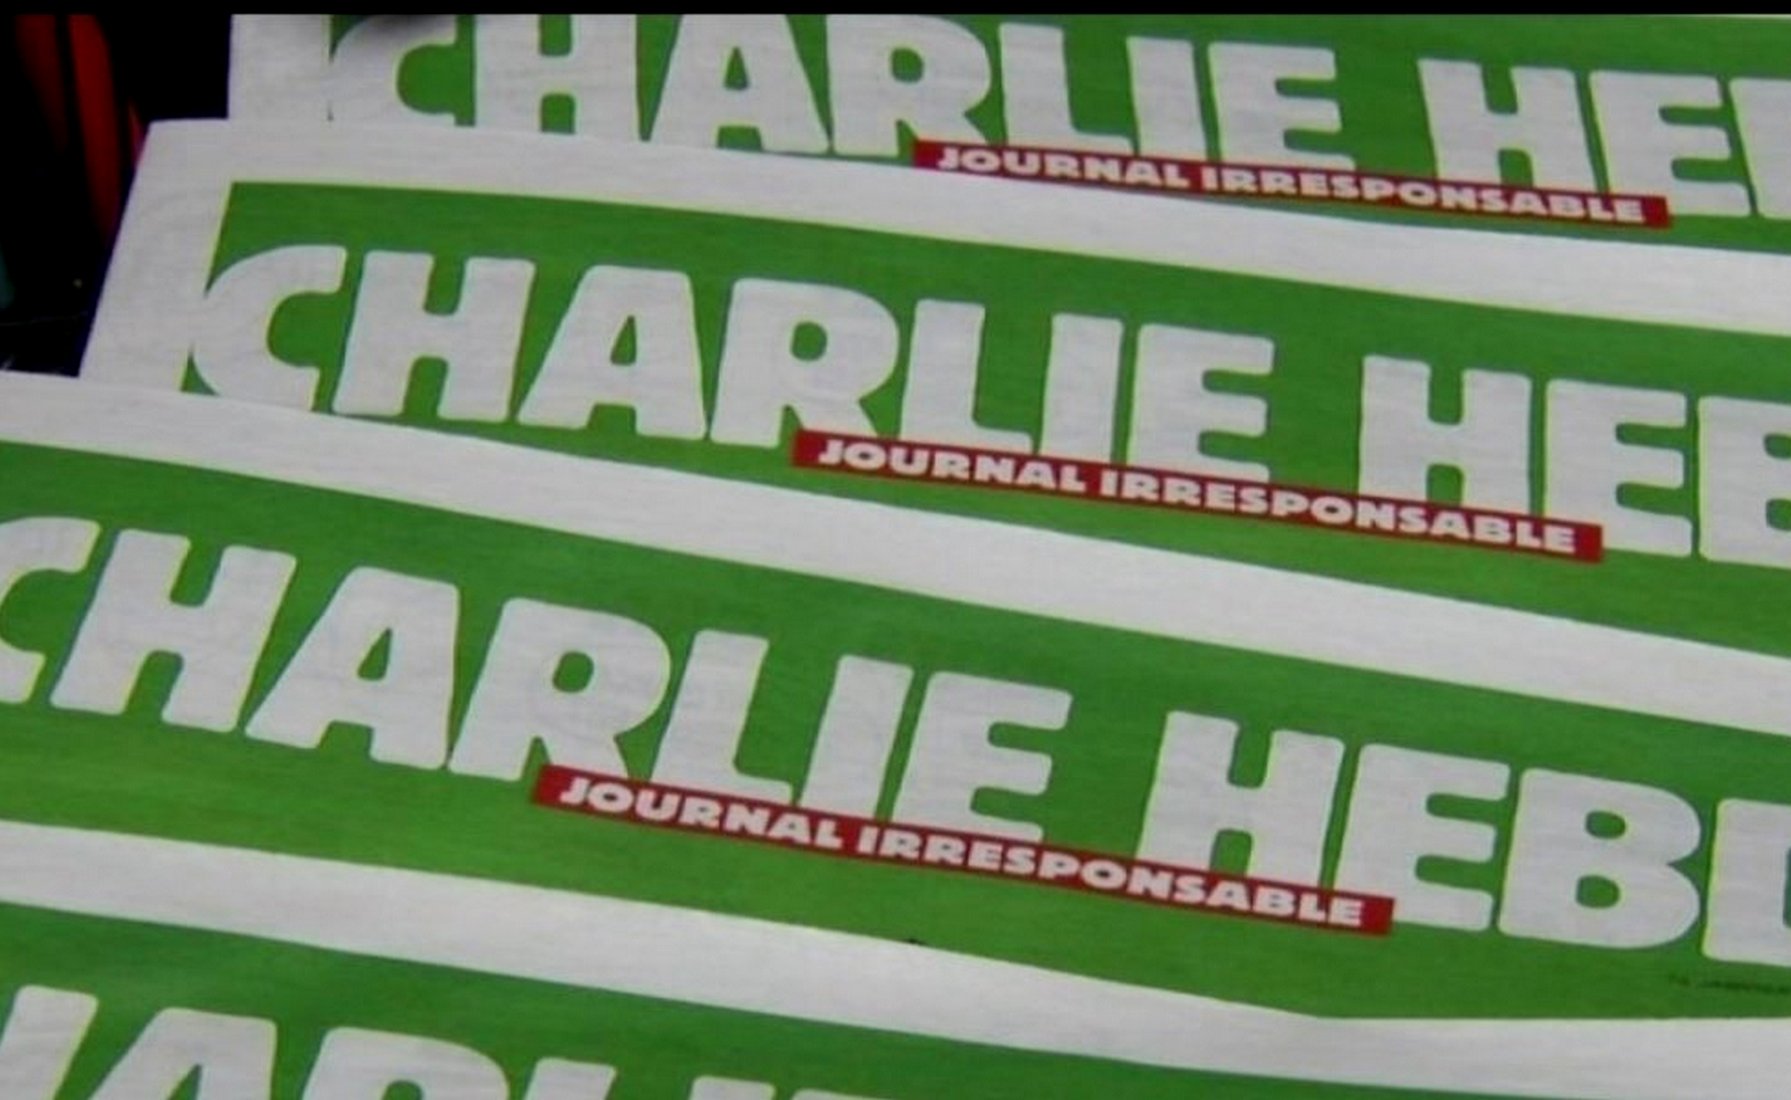 Чеченская газета опубликовала, а затем удалила карикатуры на Charlie Hebdo